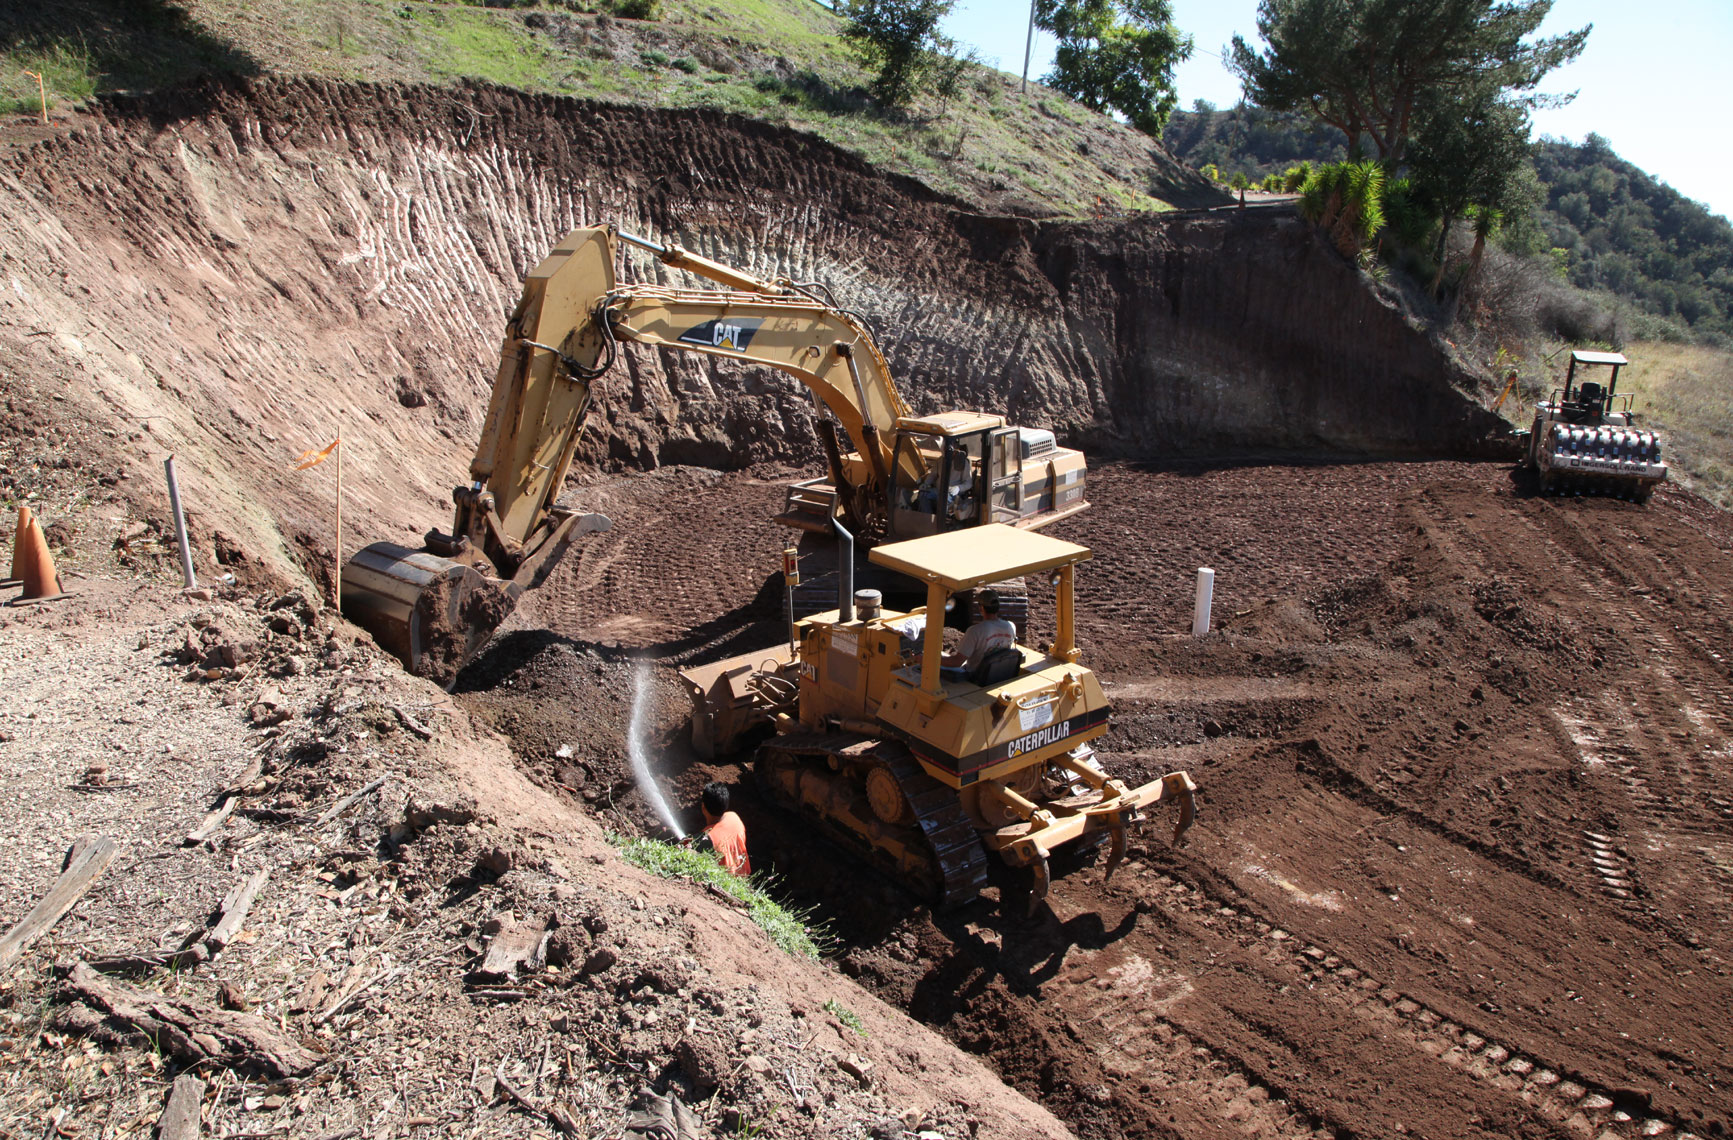 Licensed Excavating Contractors serving the Santa Barbara area since 1980